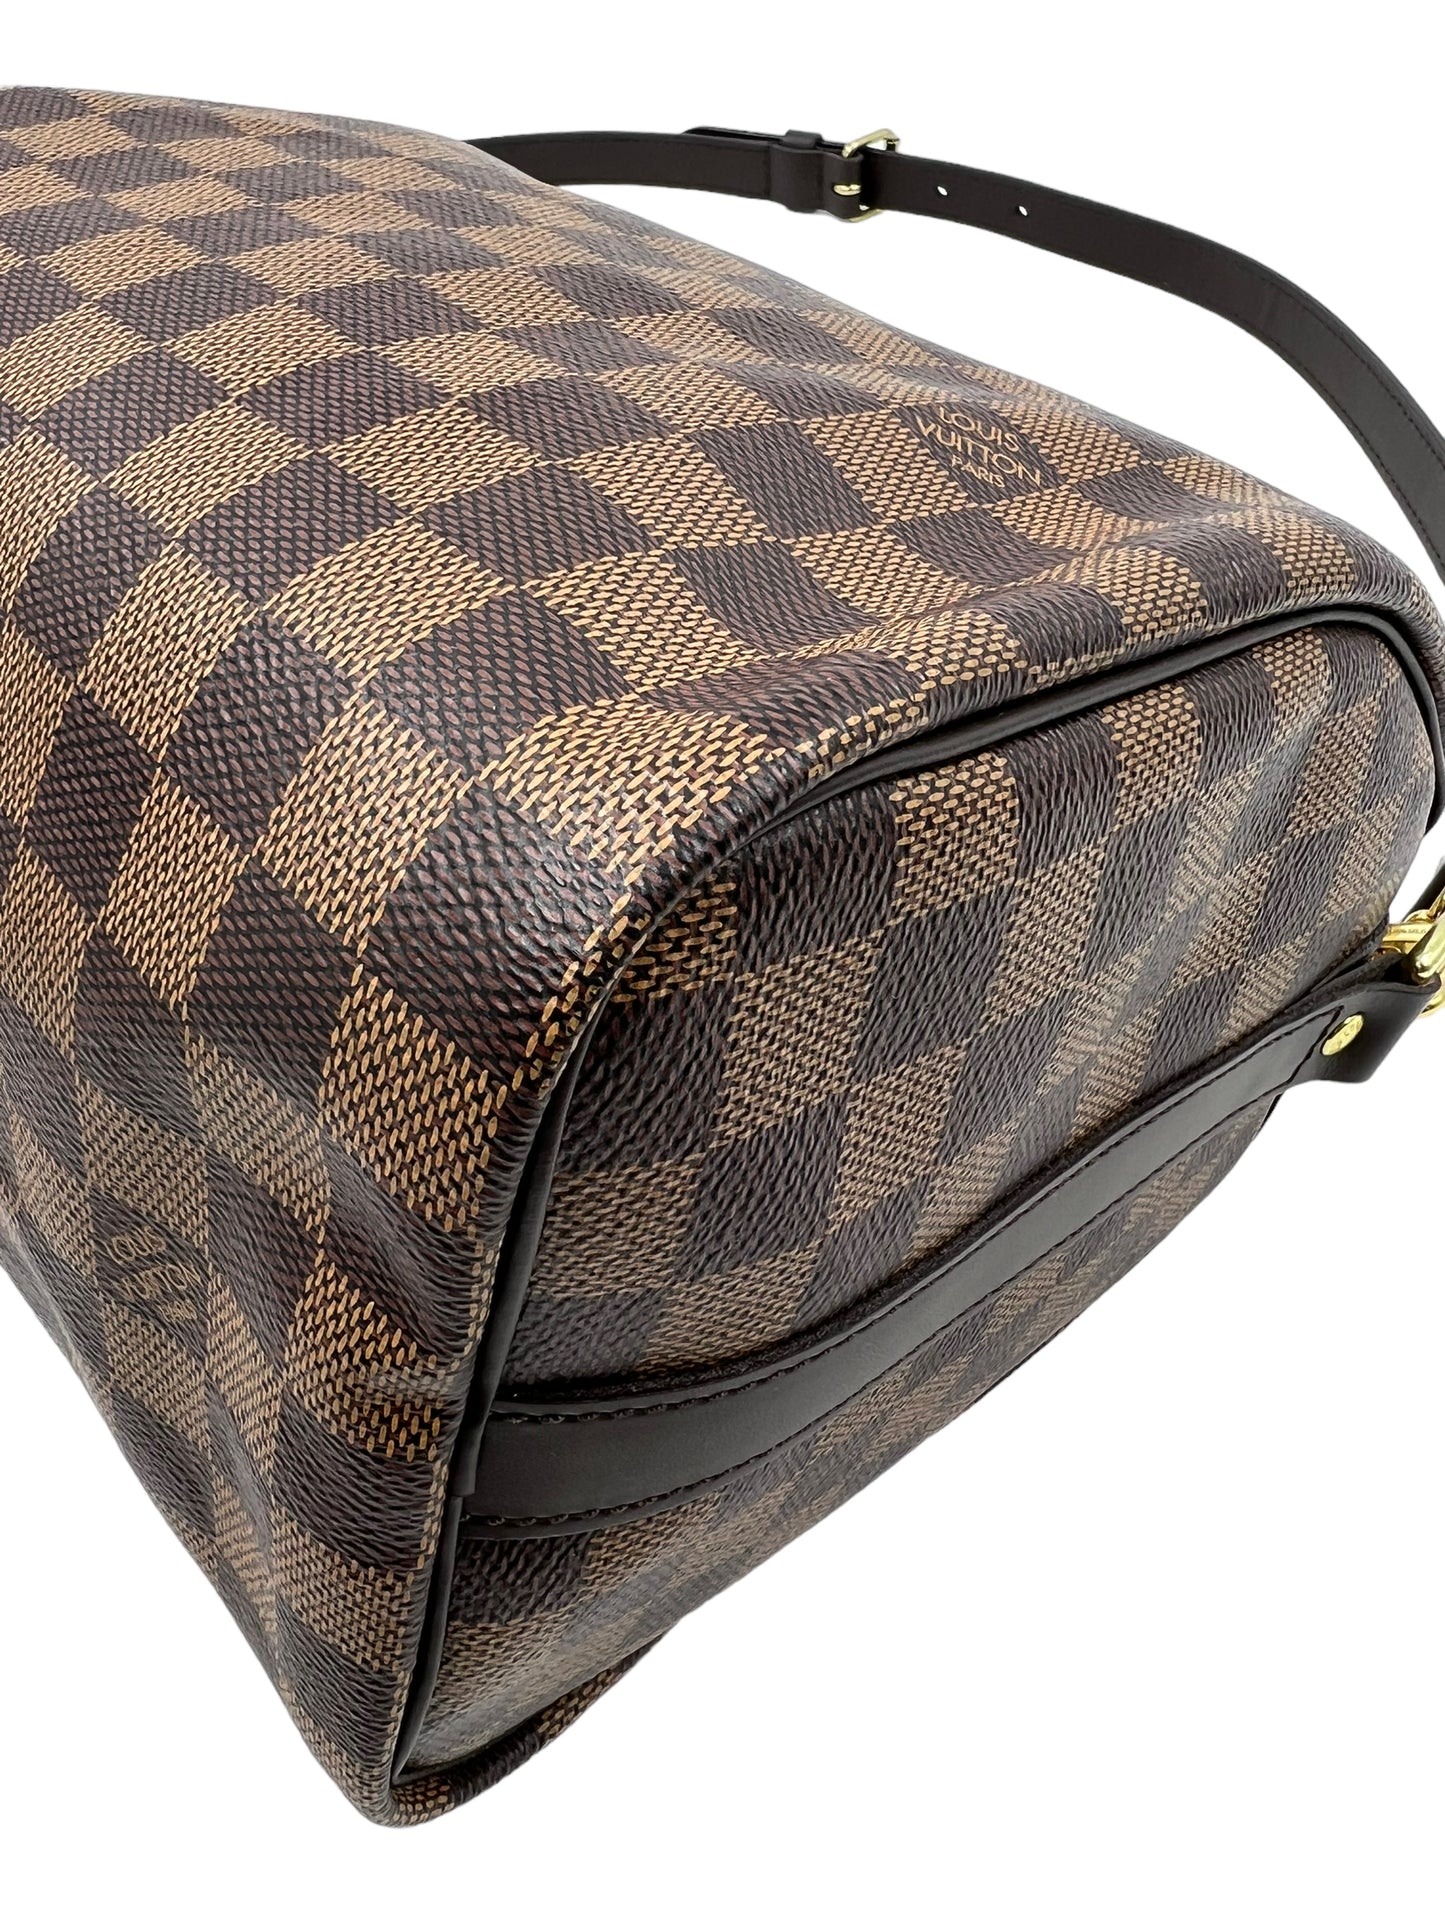 Louis Vuitton Damier Ebene Speedy 25 Bandouliere Handbag